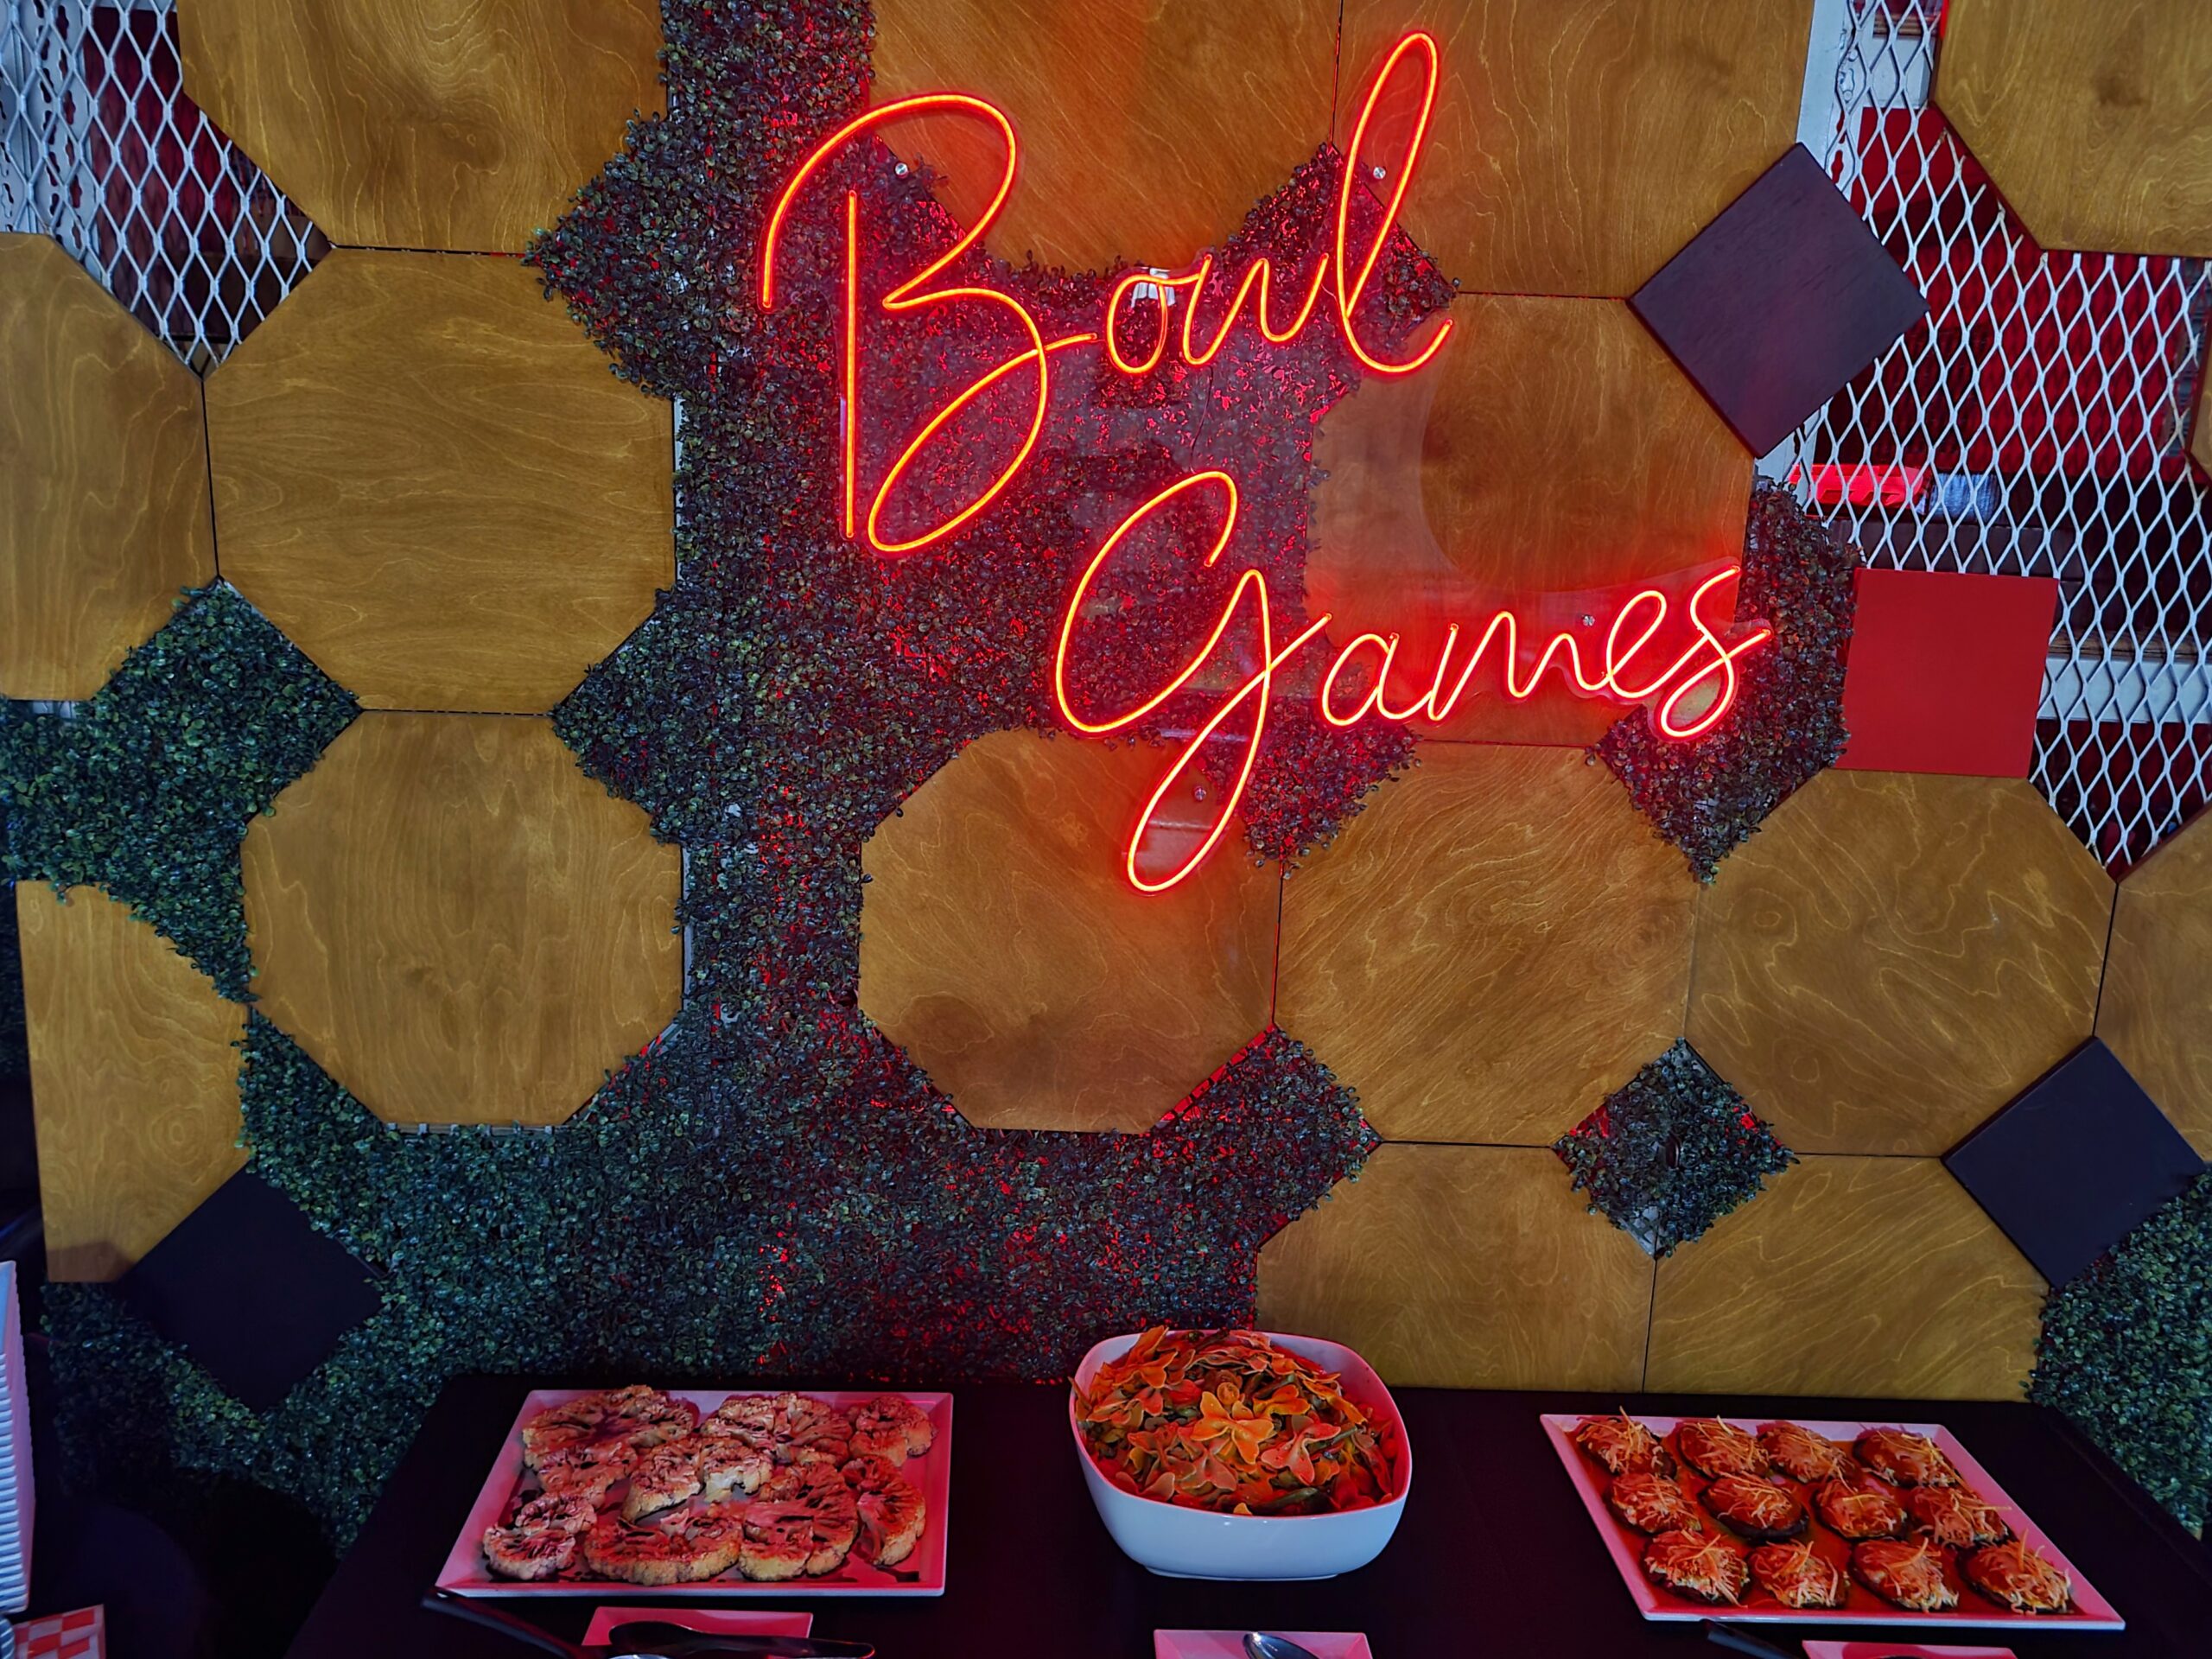 Neon eats & tasty treats! BowlGames sign shines on a table full of food.